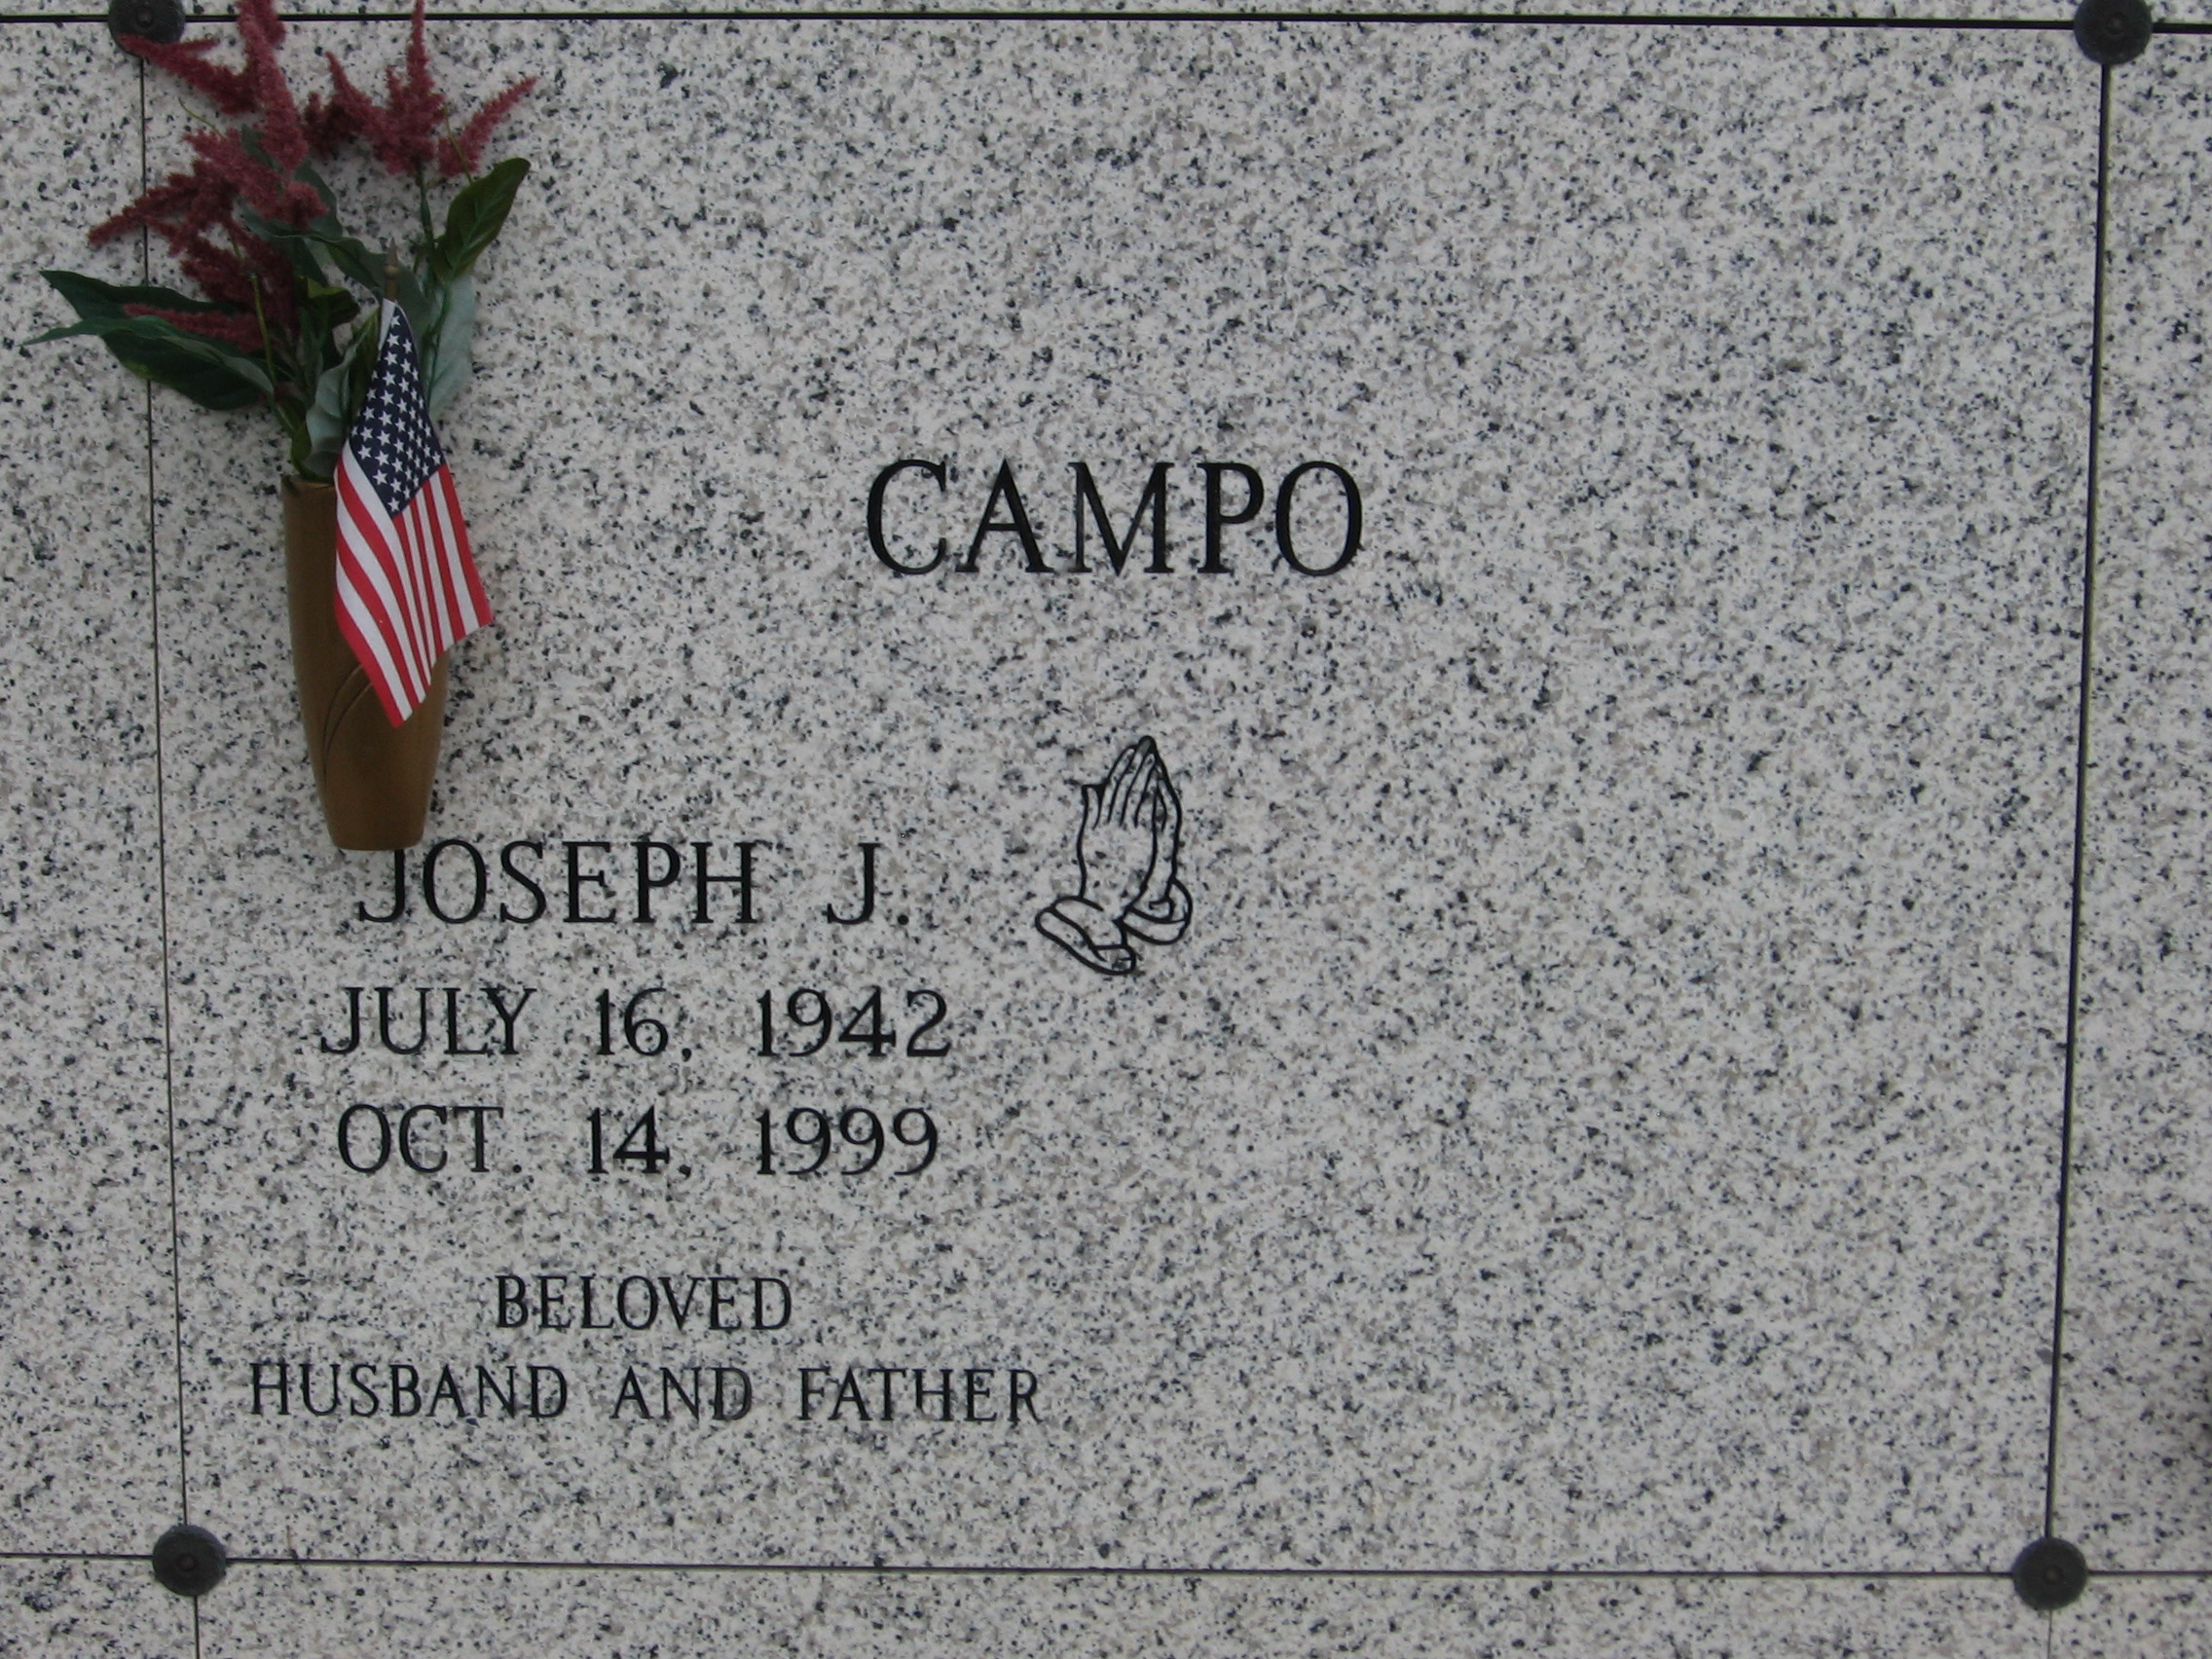 Joseph J Campo